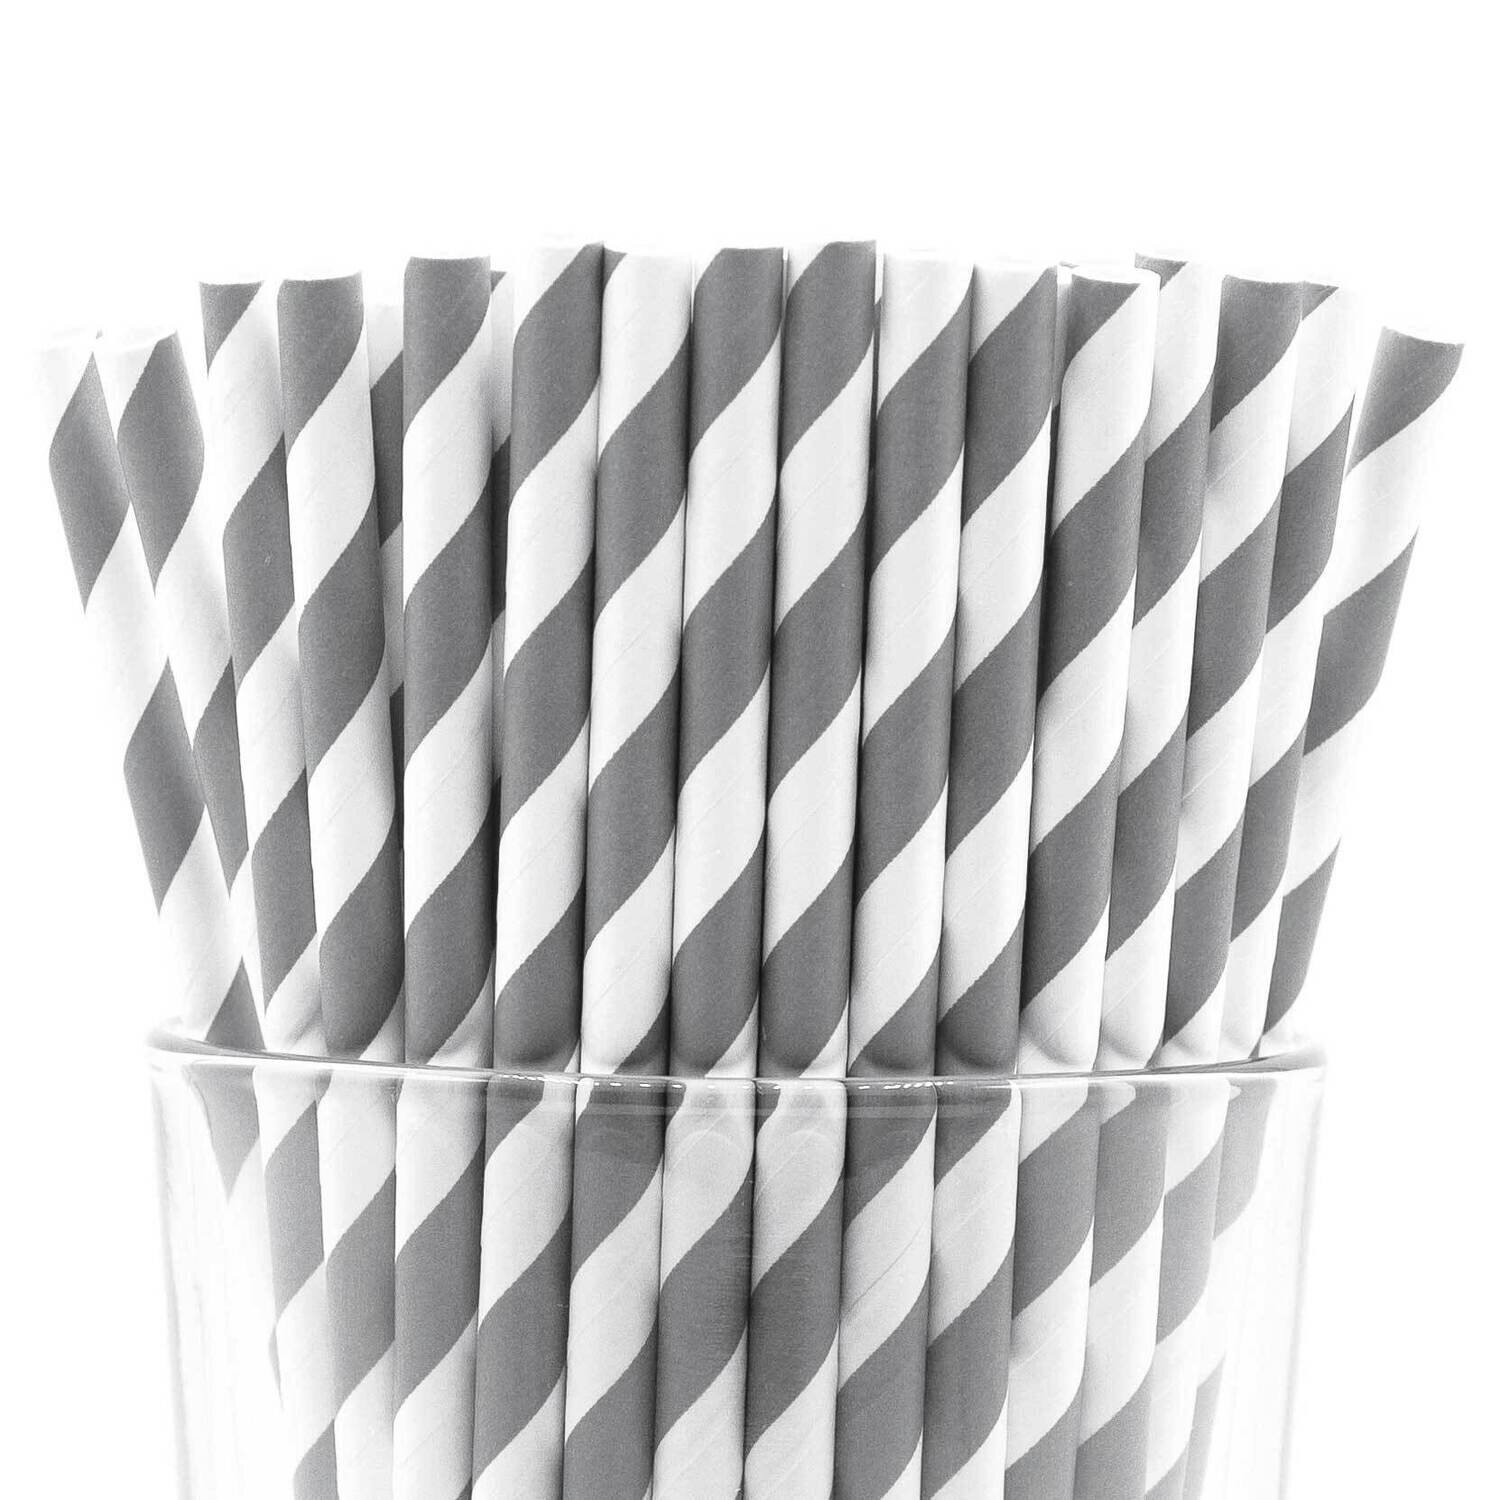 Pack of 150 Gray Wide Stripe Bio-degradable Paper Straws GM22623